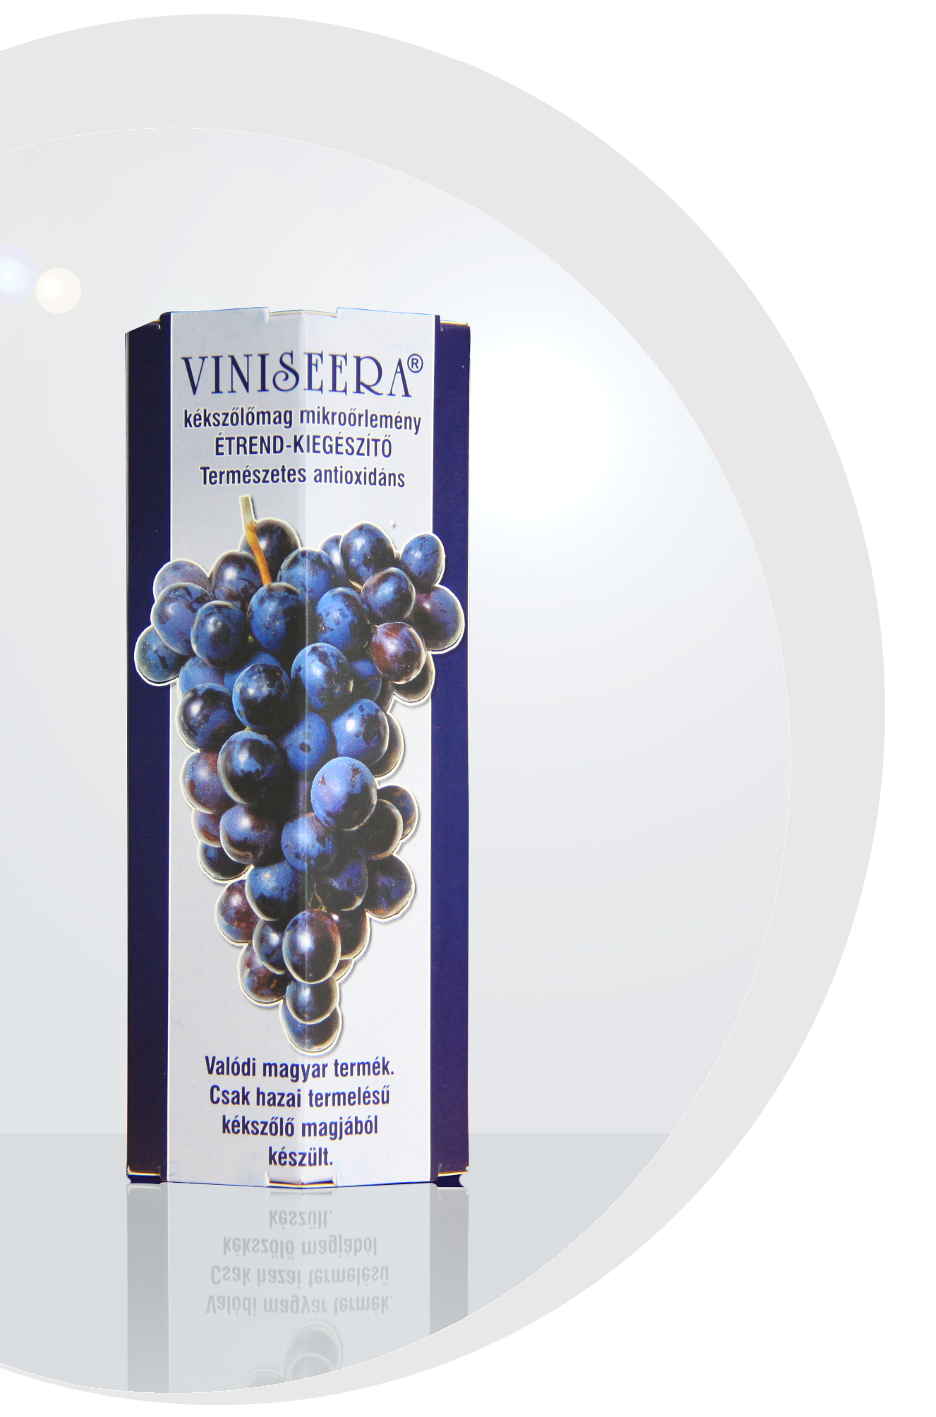 Viniseera, the 100% natural antioxidant